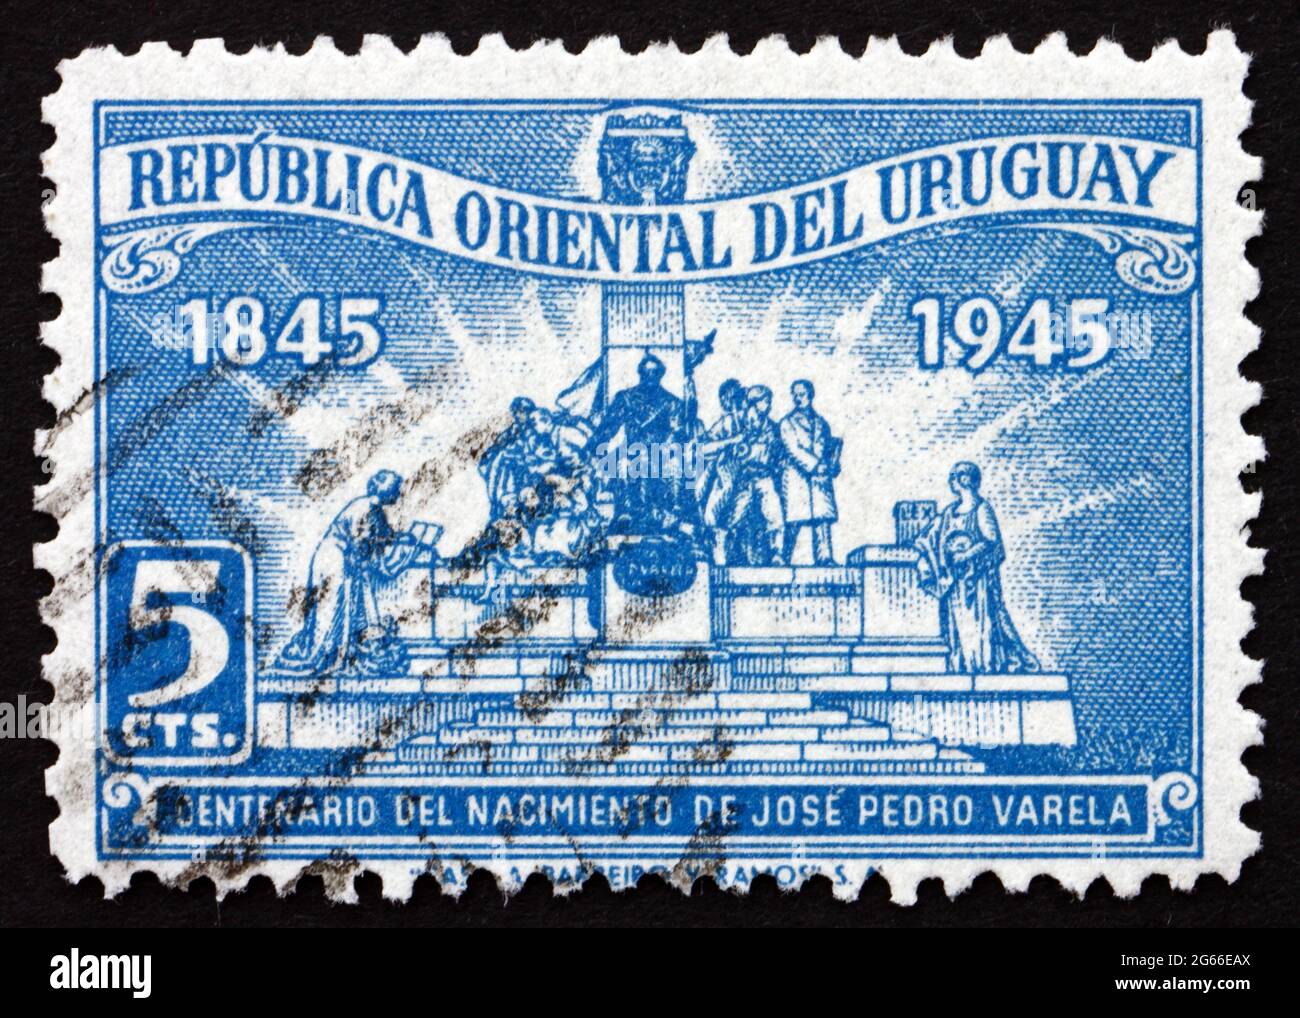 URUGUAY - CIRCA 1945: a stamp printed in the Uruguay shows Monument to Jose Pedro Varela, Author, circa 1945 Stock Photo